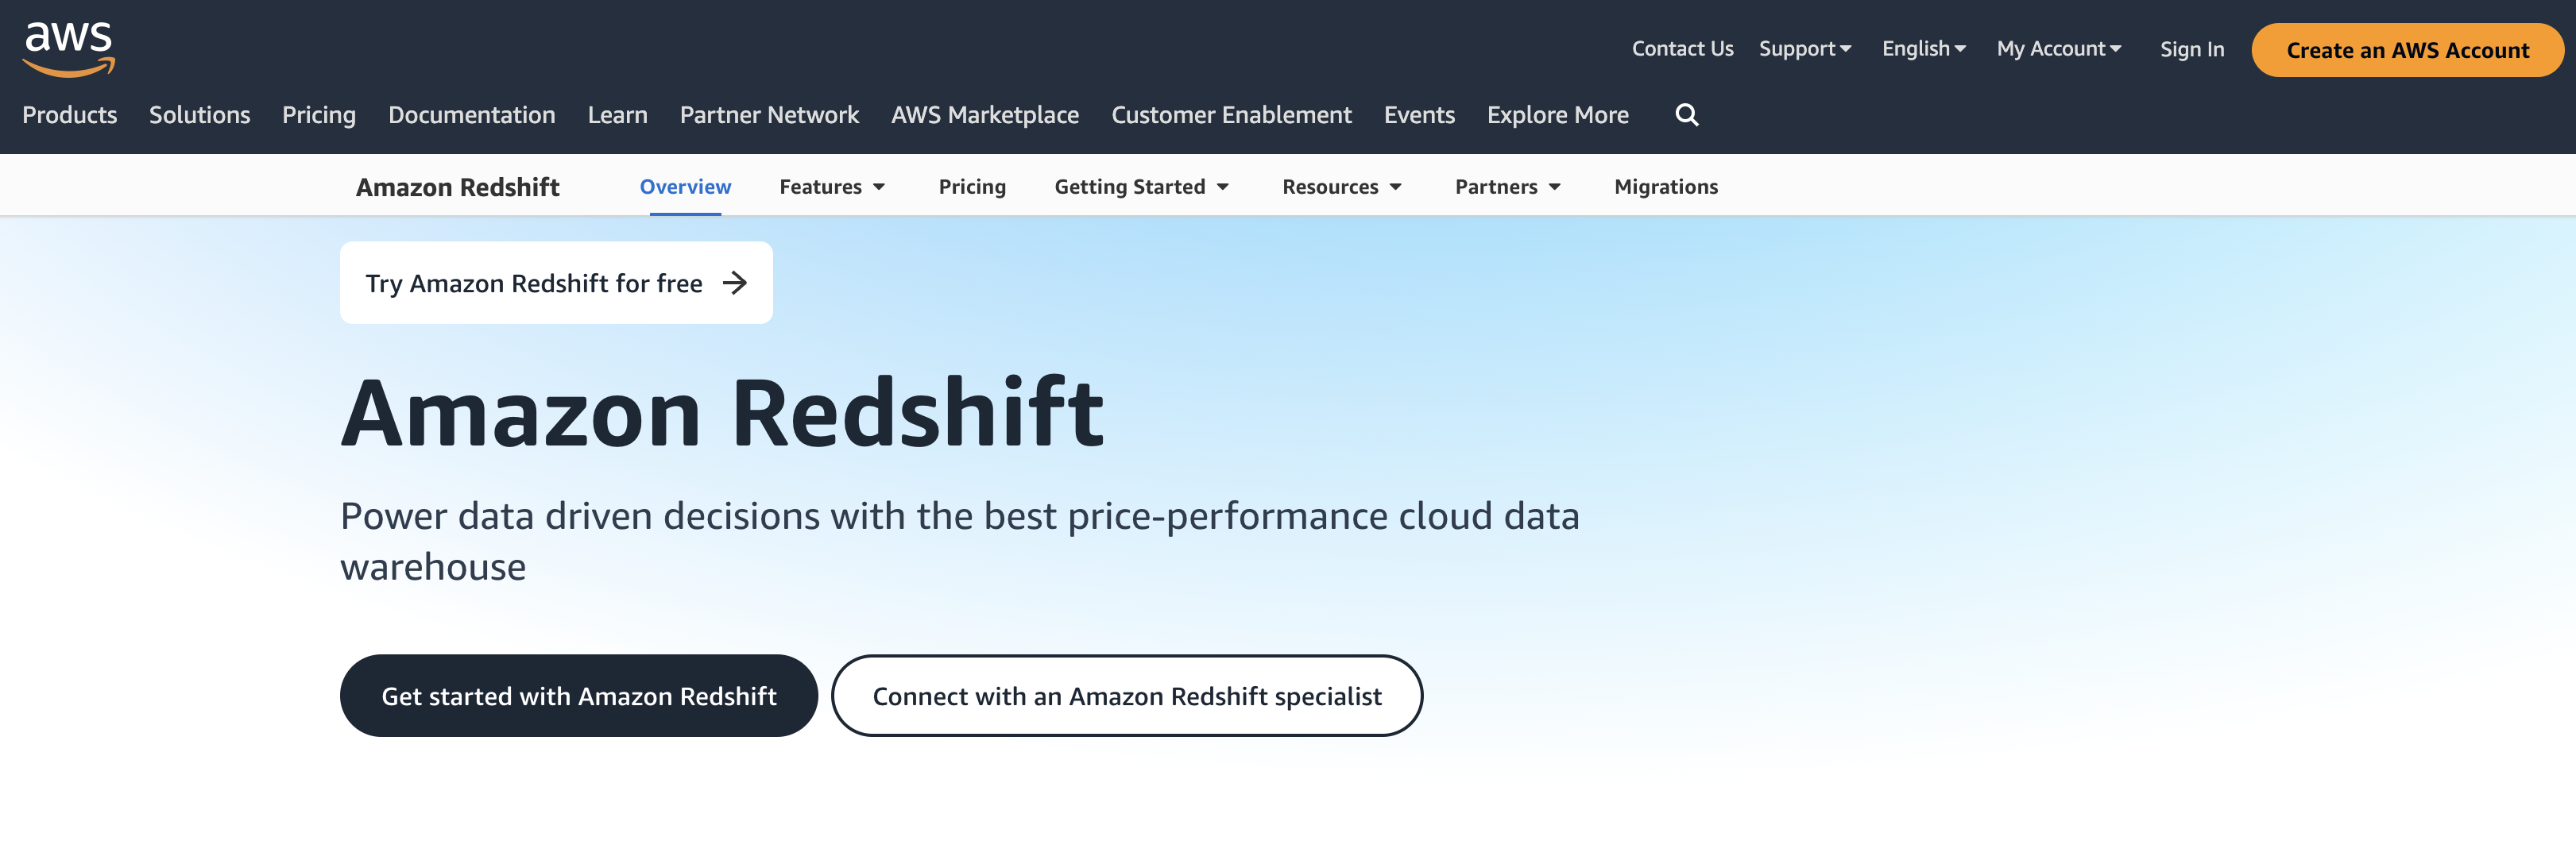 Amazon Redshift - Data Warehouse